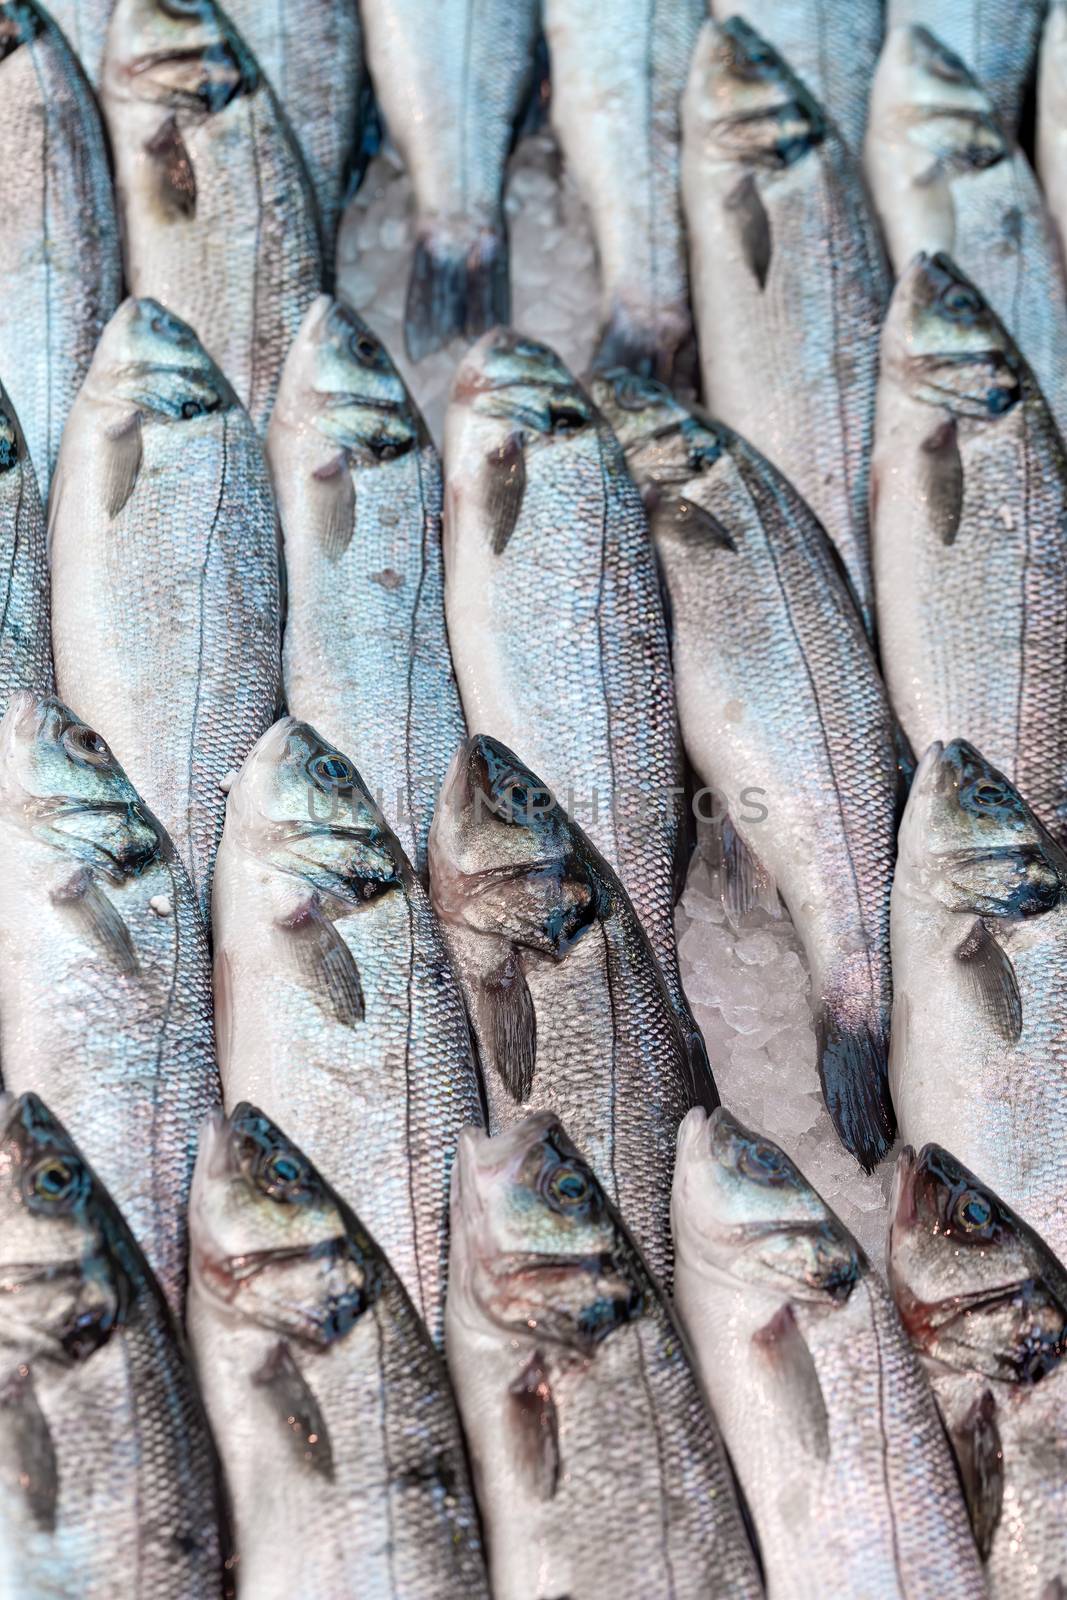 Fresh sea bass, at a UK fishmongers market stall by magicbones